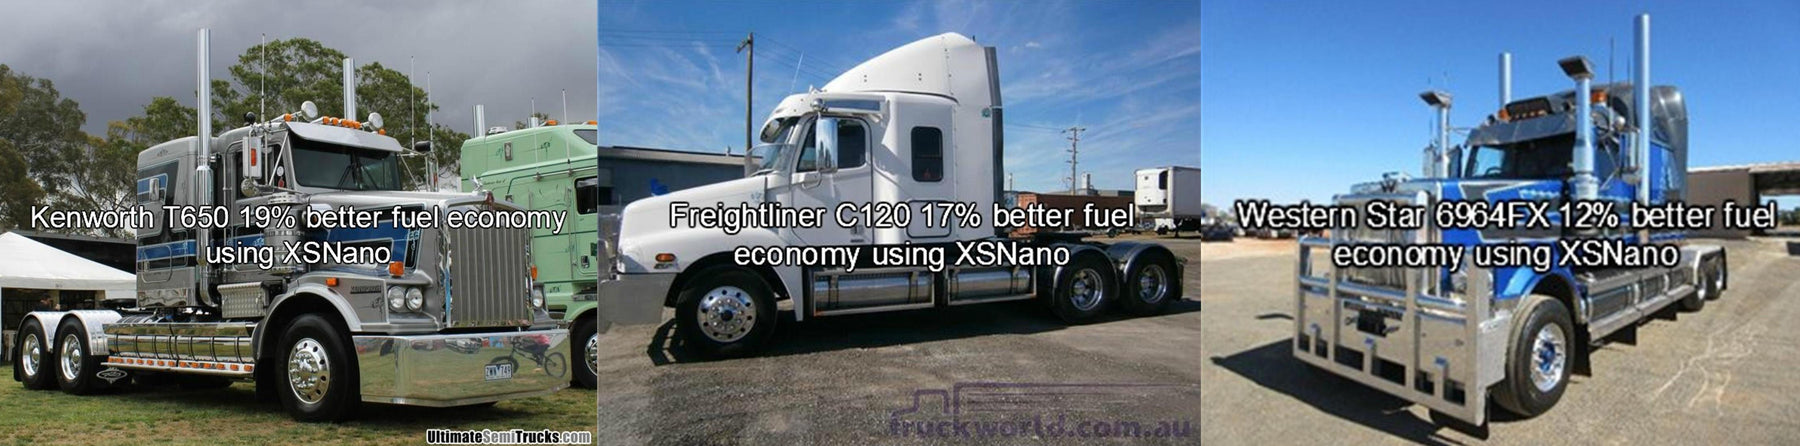 XSNANO dramatically improves fuel economy in trucks